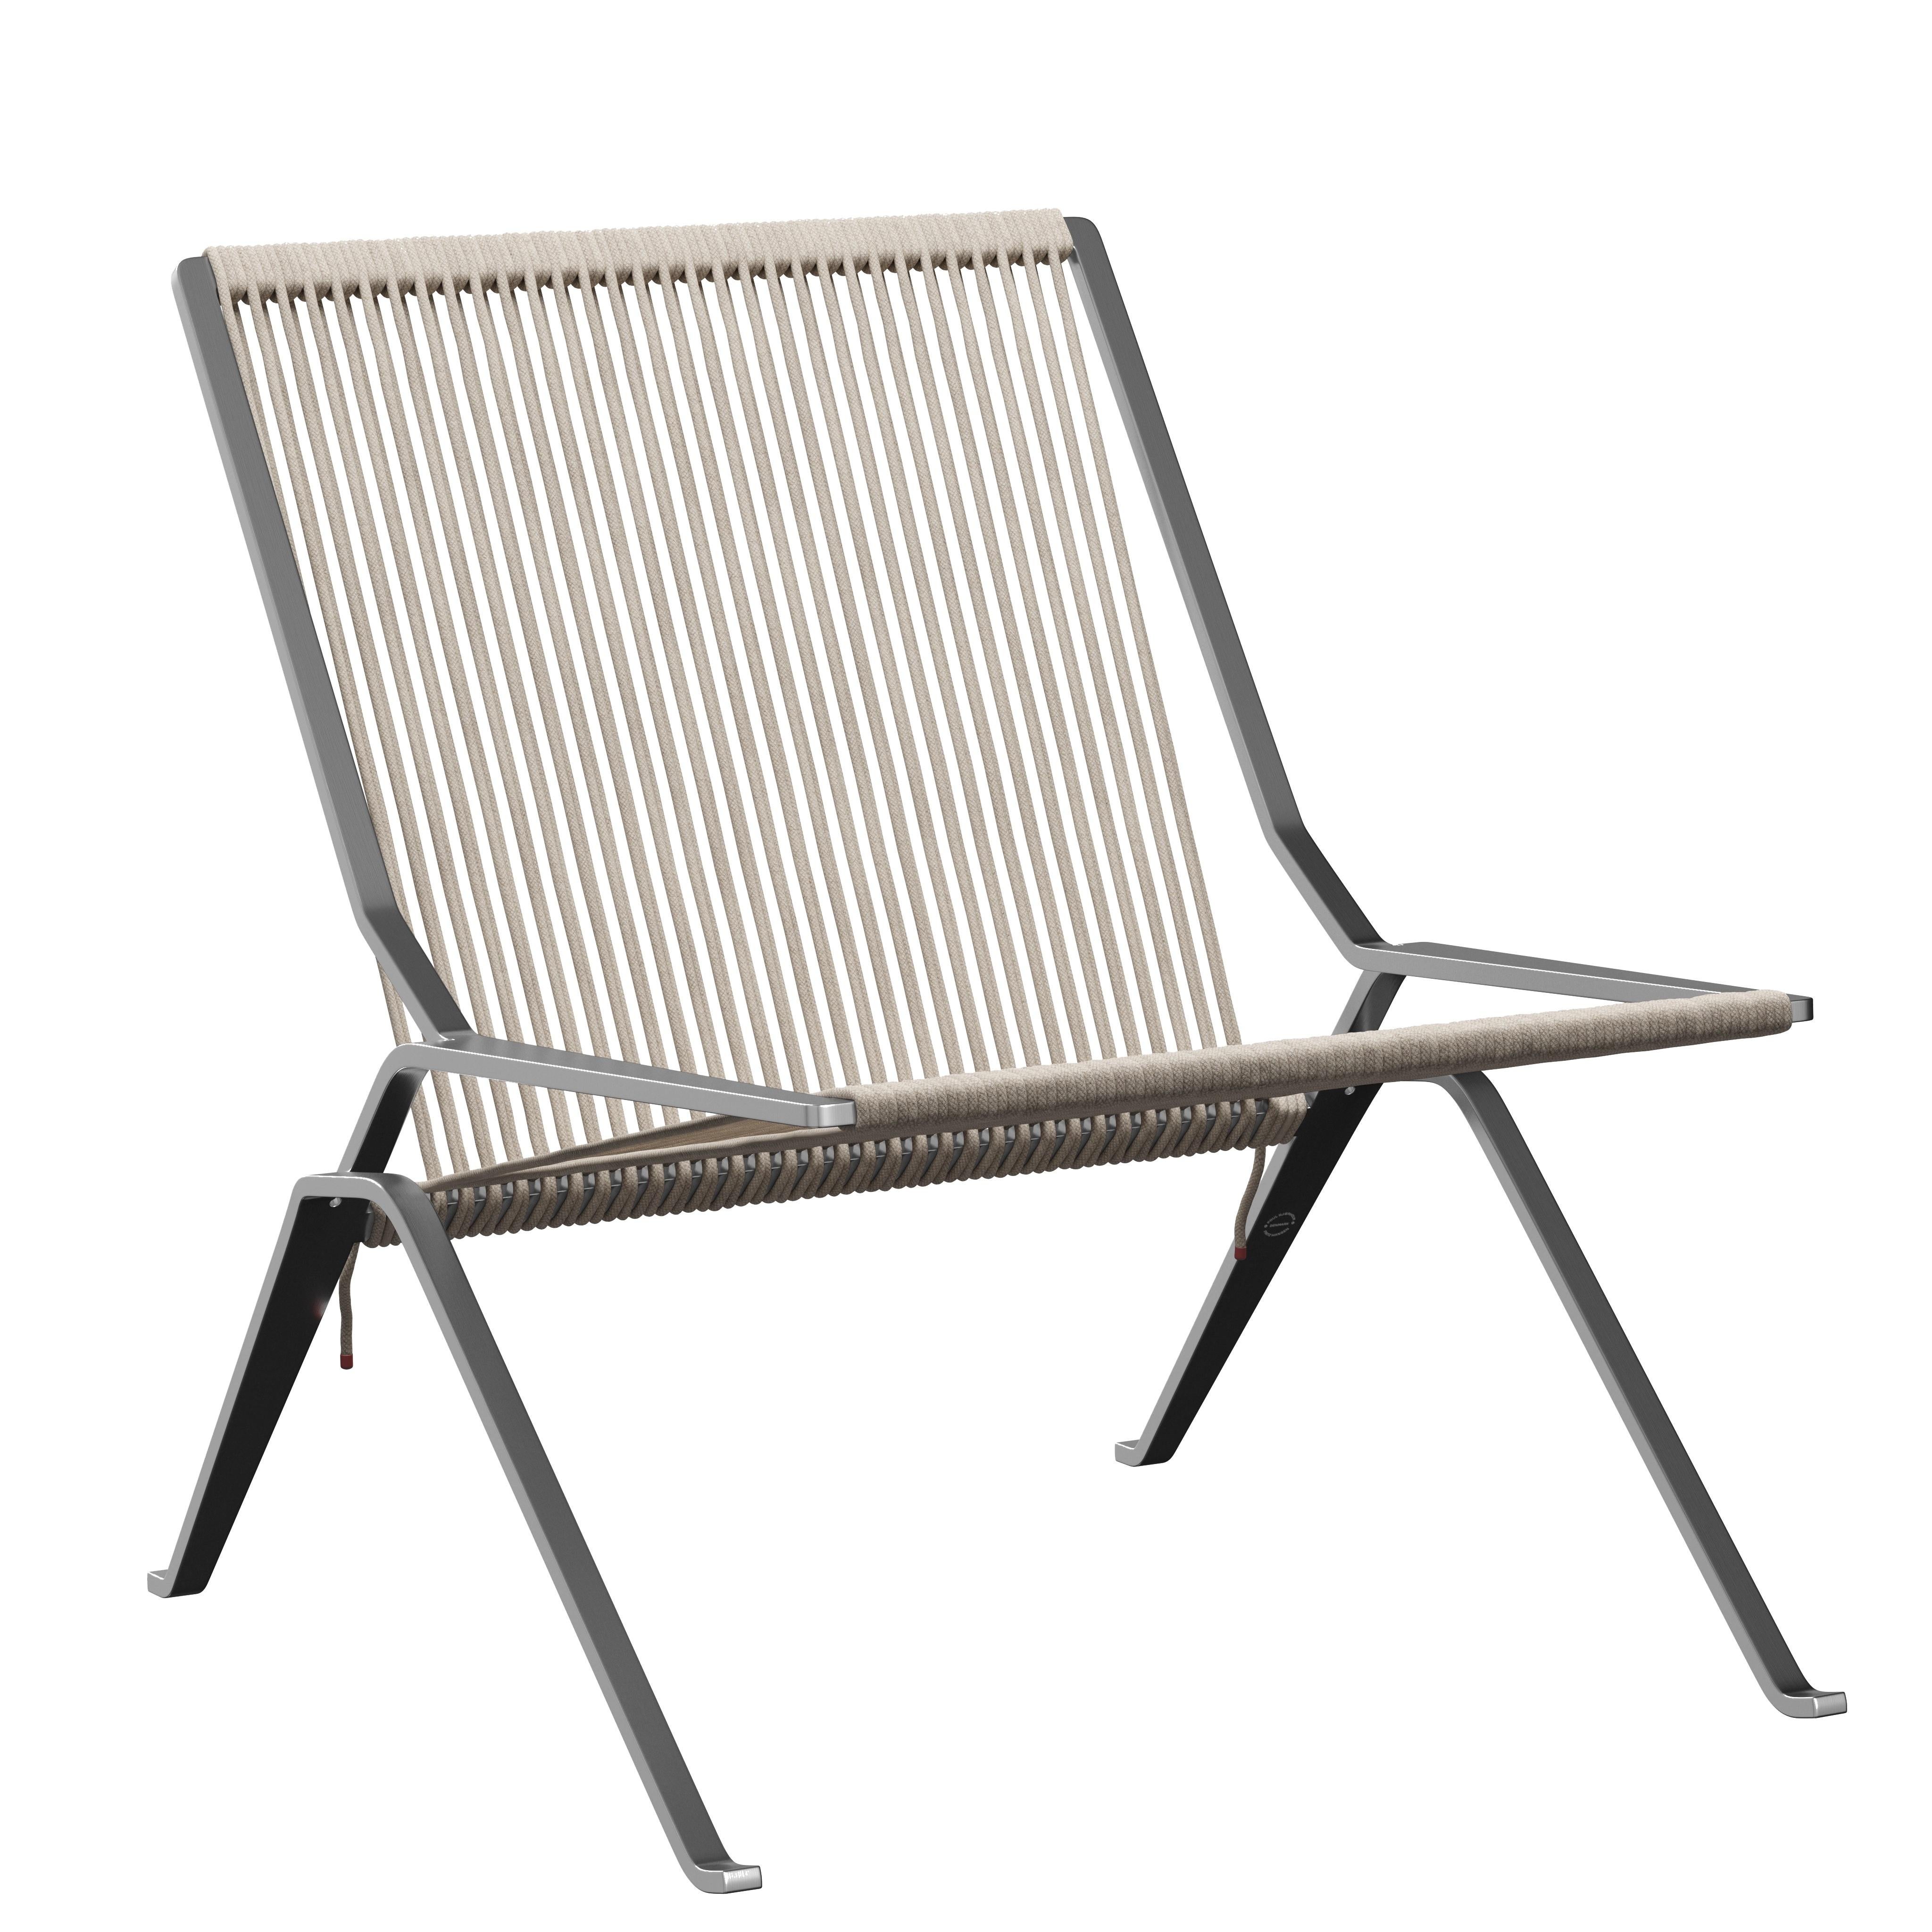 Poul Kjærholm 'PK25' Chair for Fritz Hansen in Black Flag Halyard For Sale 3